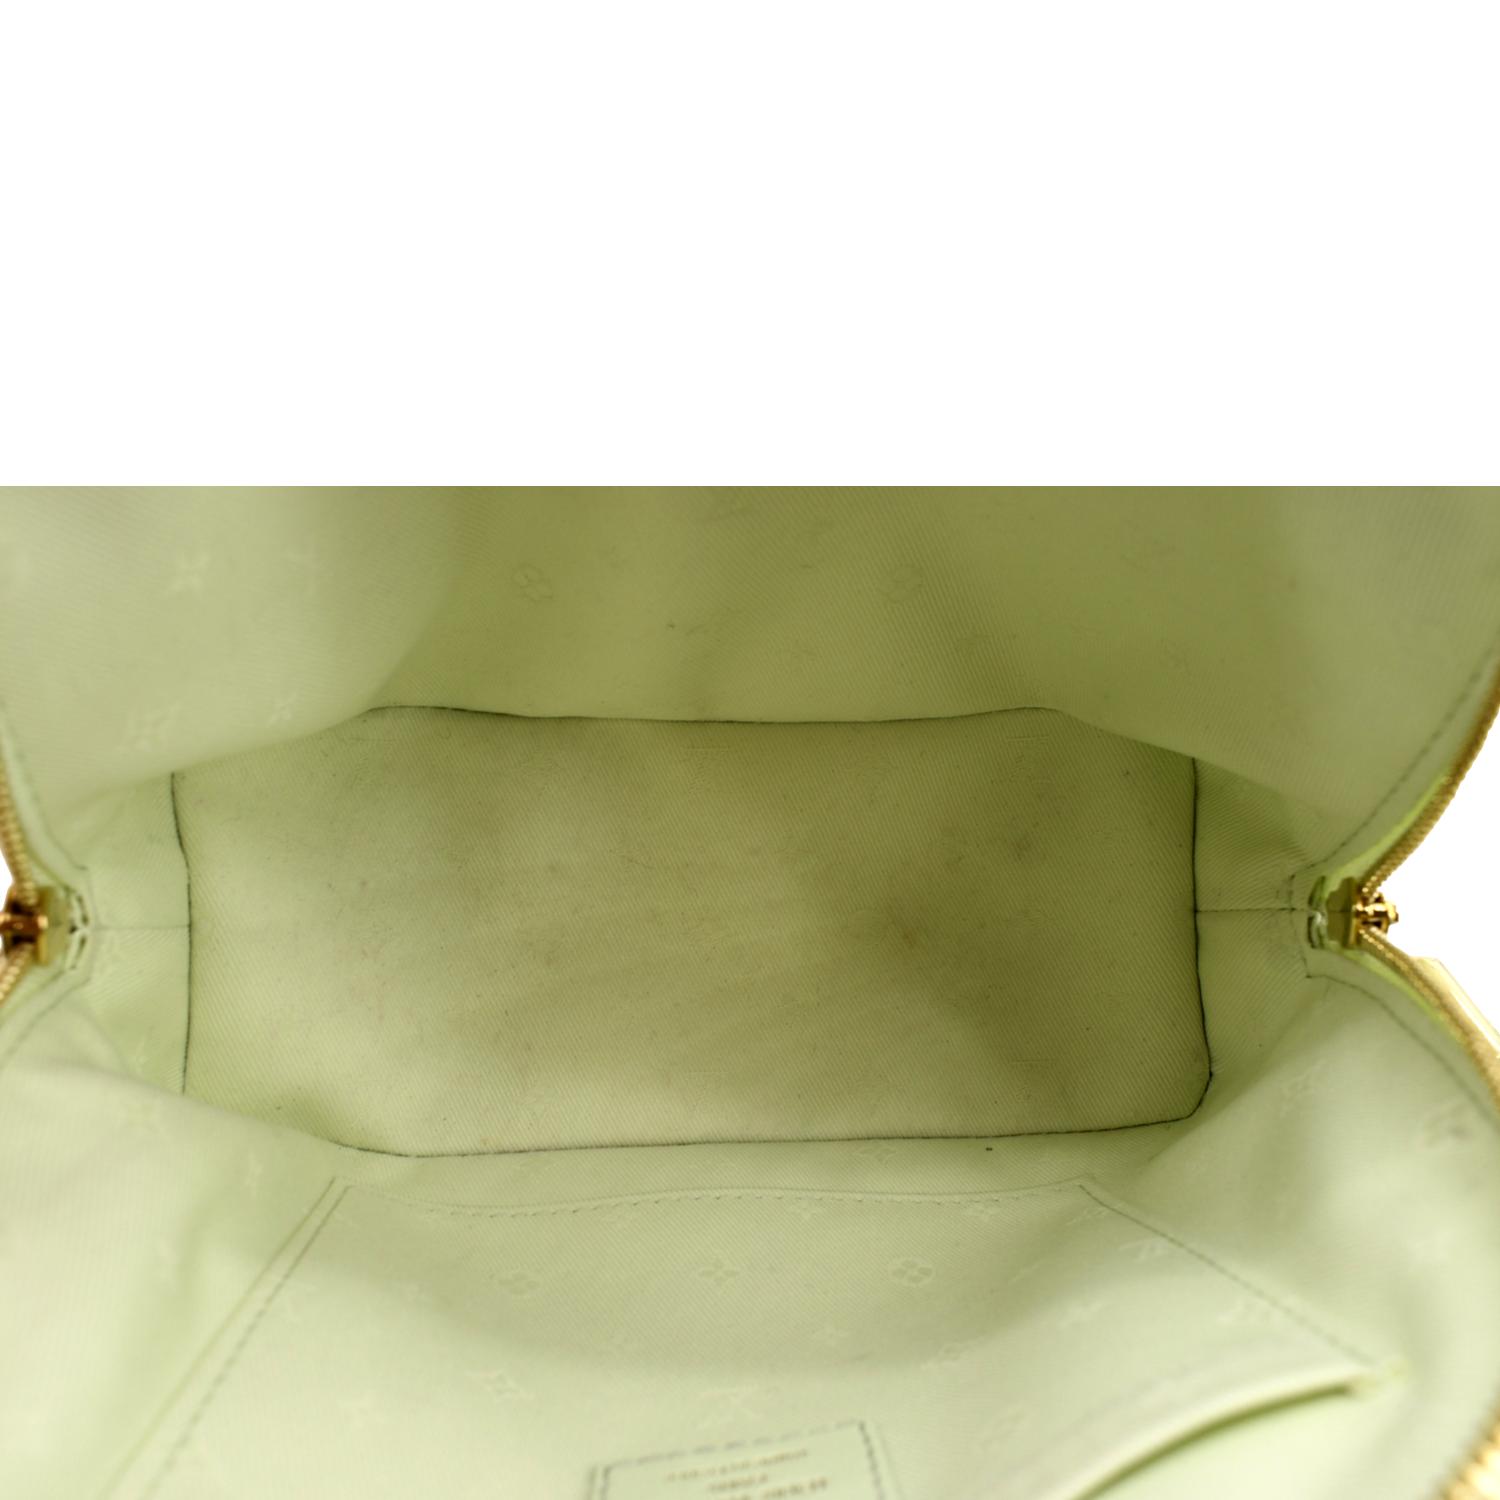 Louis Vuitton Alma Bb Bubblegram Quilted Leather Satchel Crossbody Bag Green